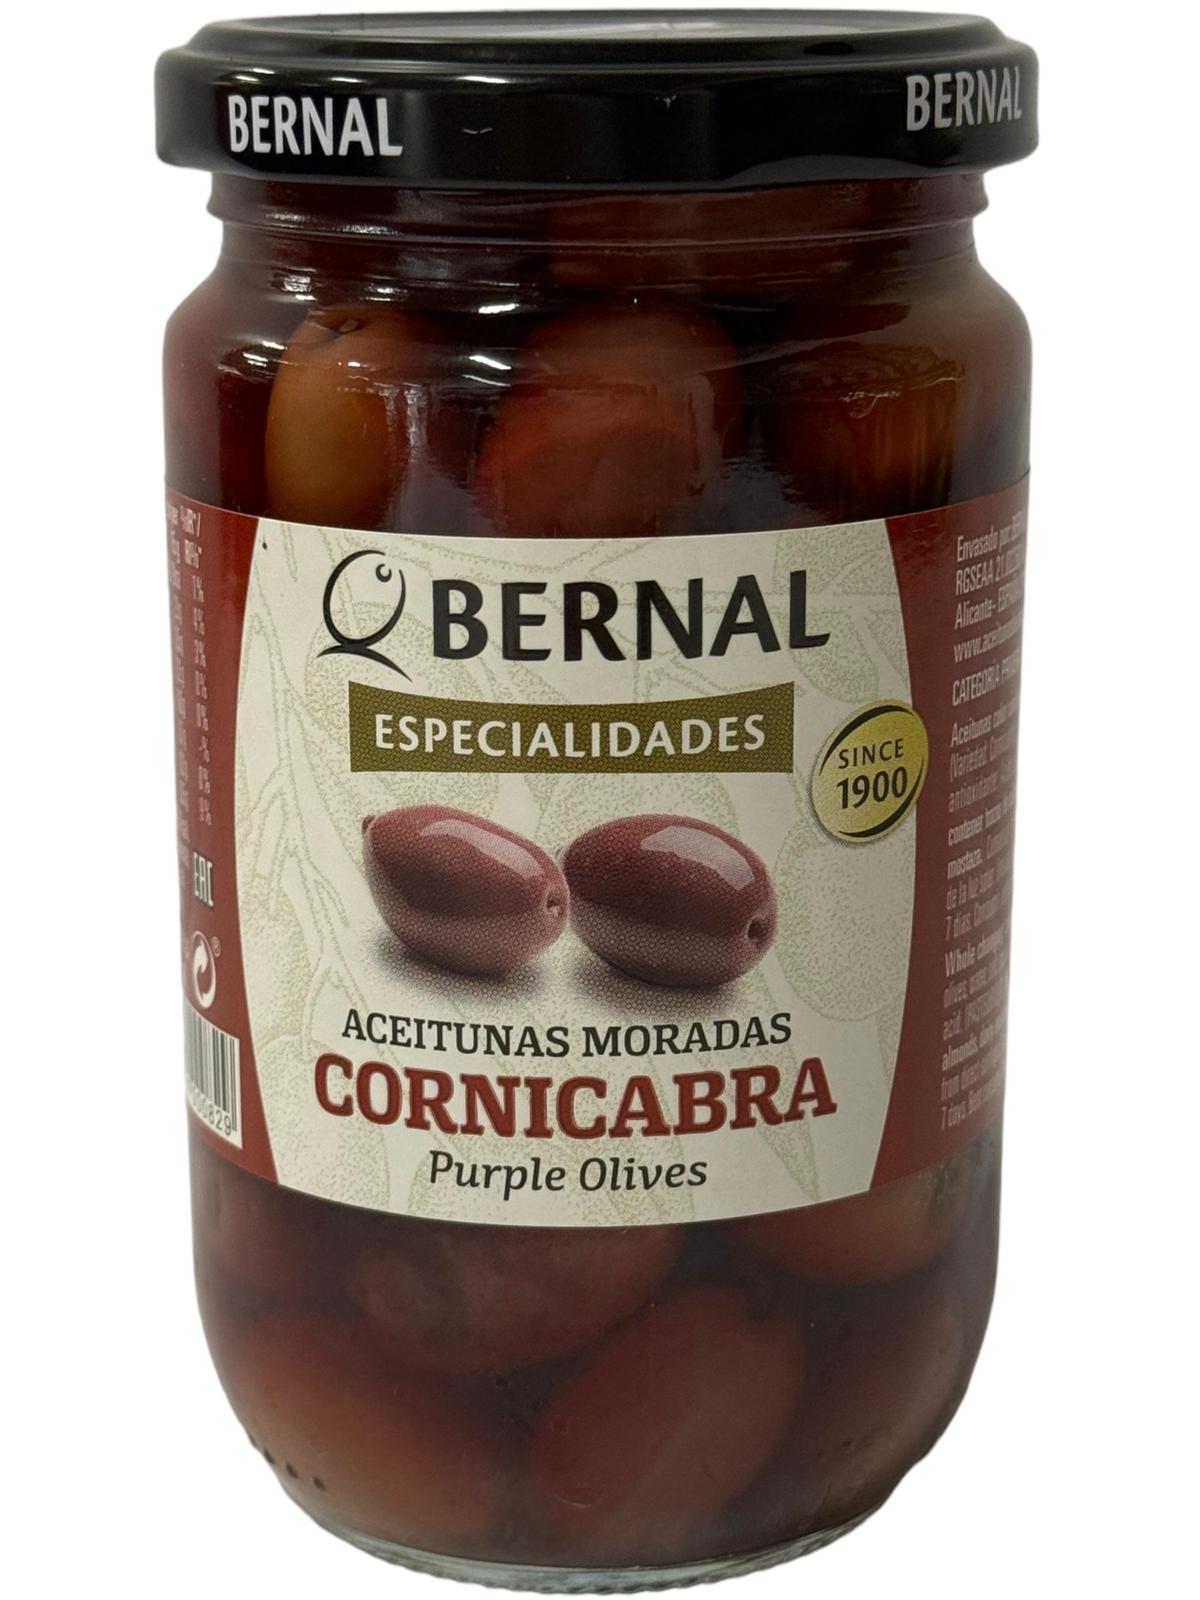 Bernal Especialidades Aceitunas Moradas Cornicabra Purple Olives 300g Best Before April 2027